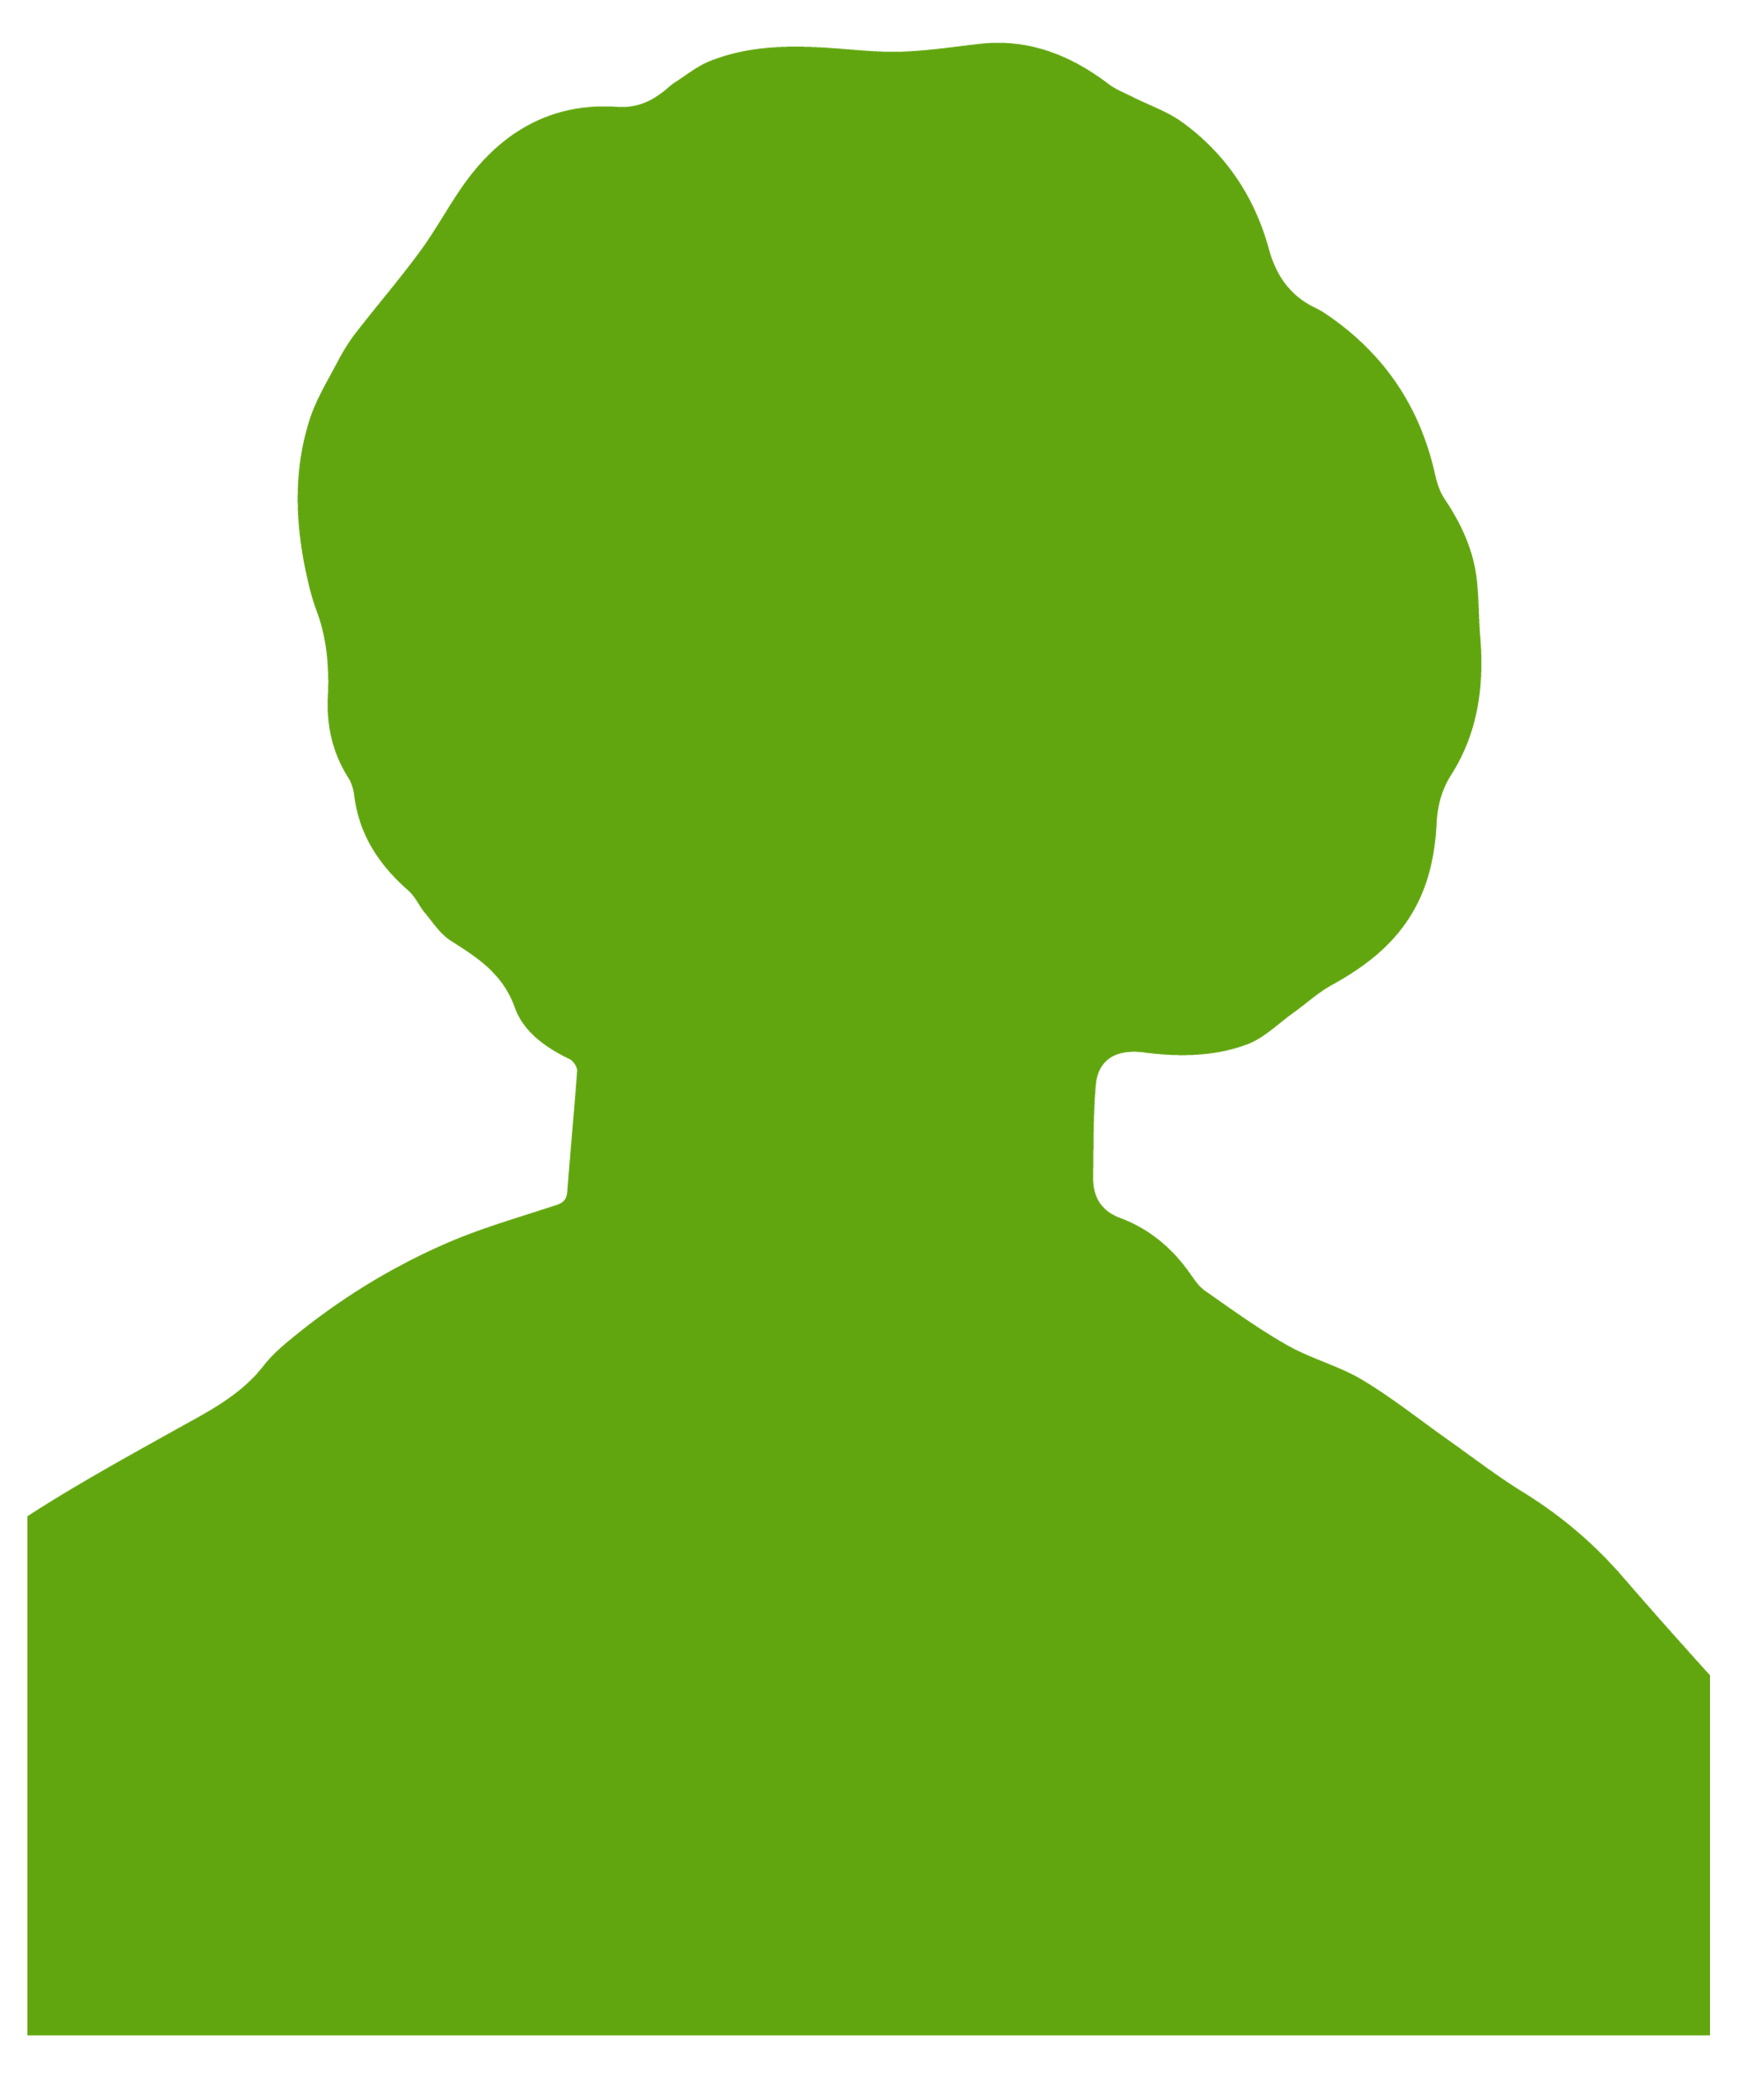 Green silhouette of Arabella Scott